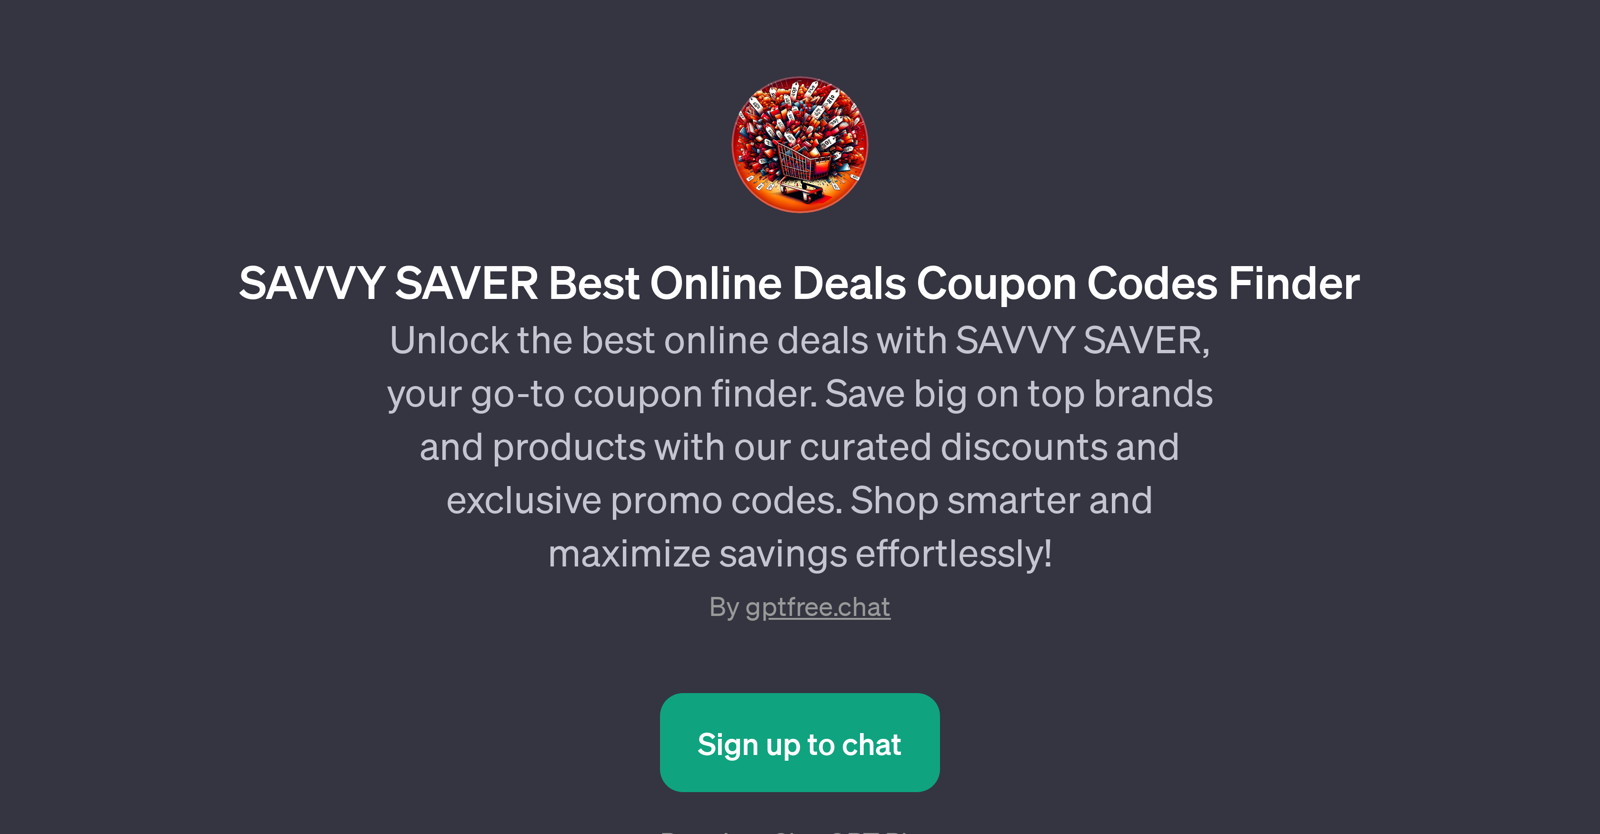 SAVVY SAVER Best Online Deals Coupon Codes Finder website